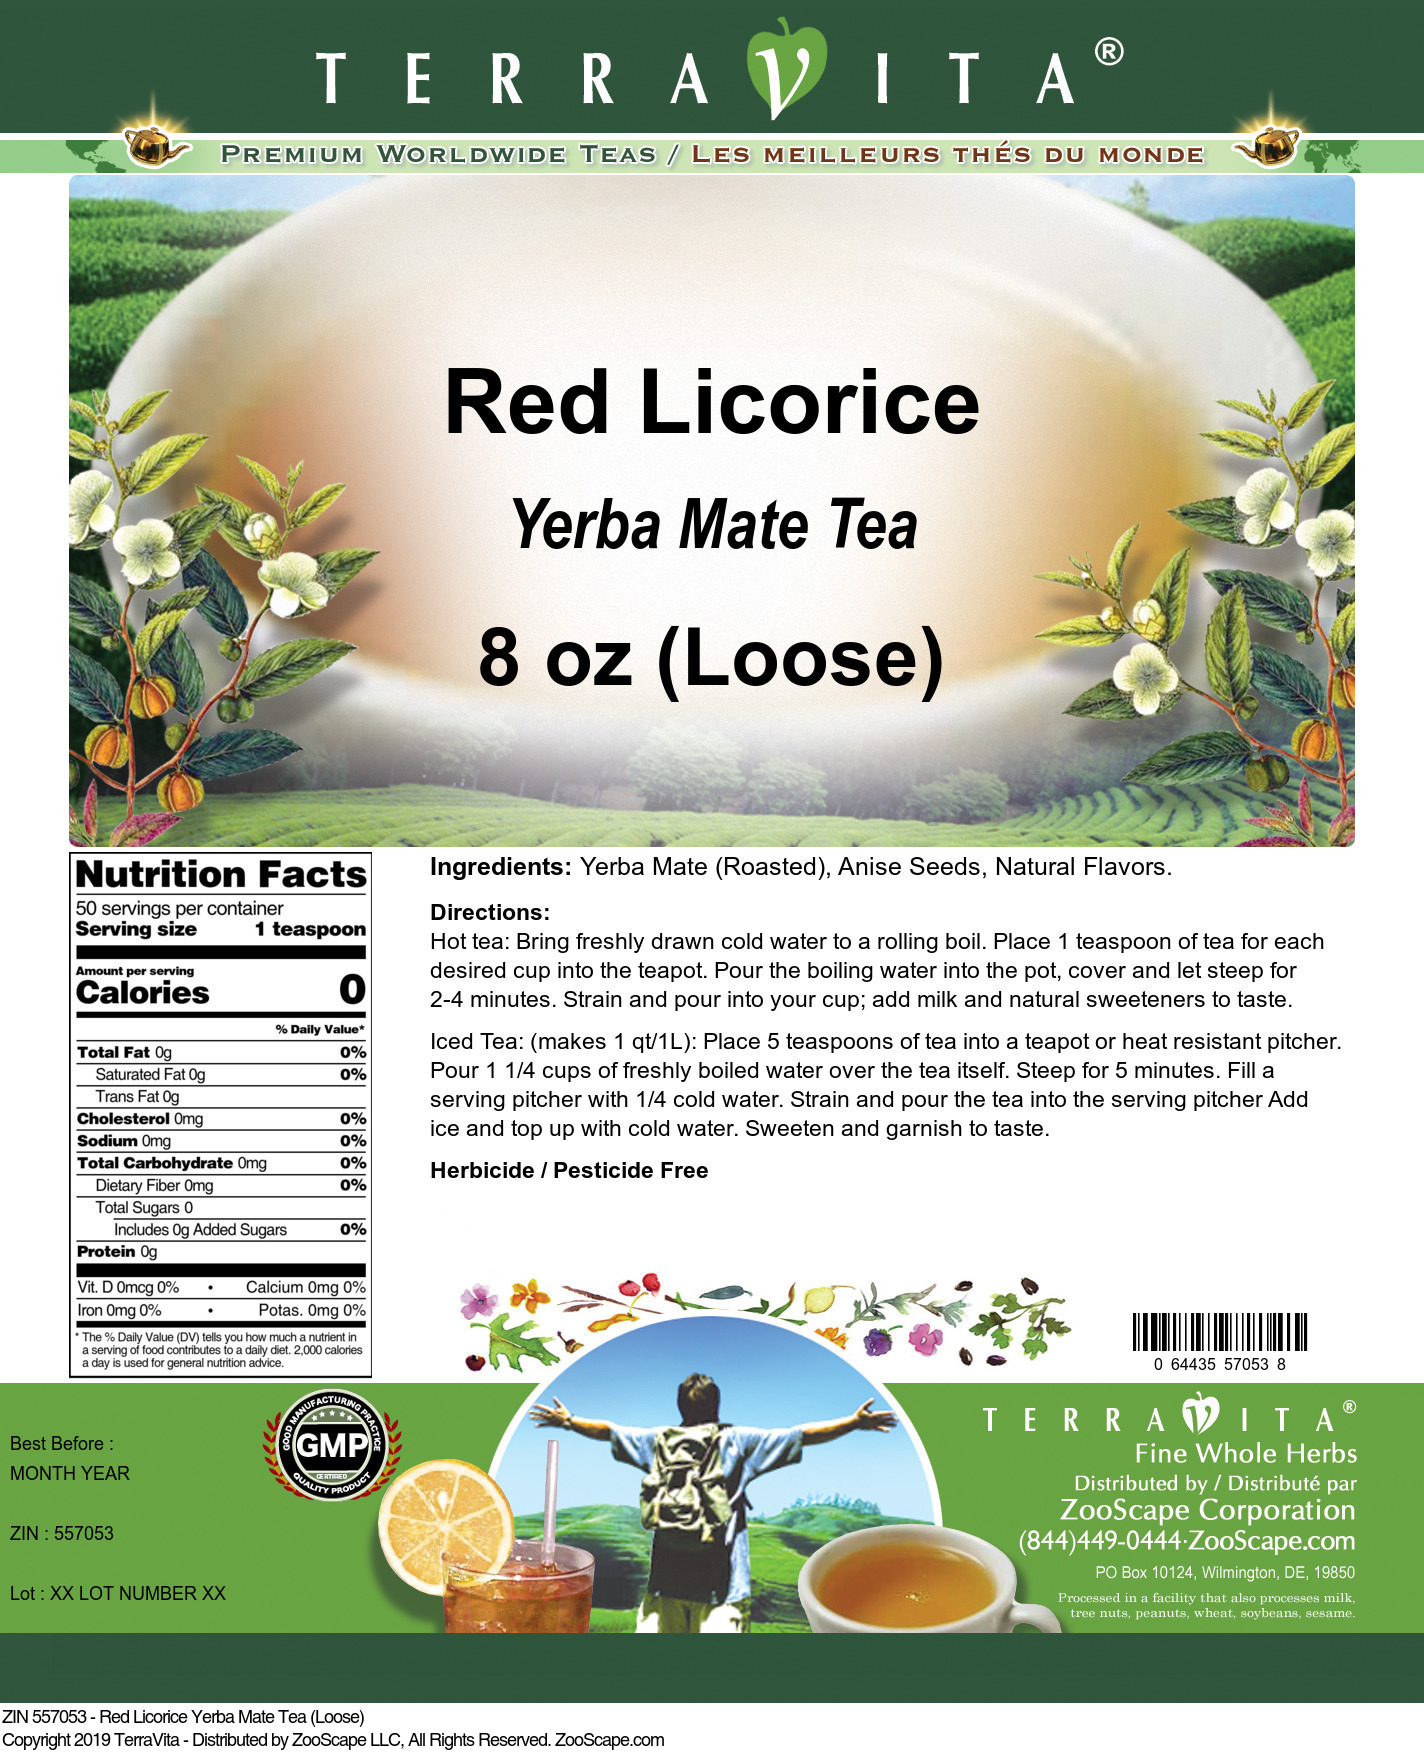 Red Licorice Yerba Mate Tea (Loose) - Label